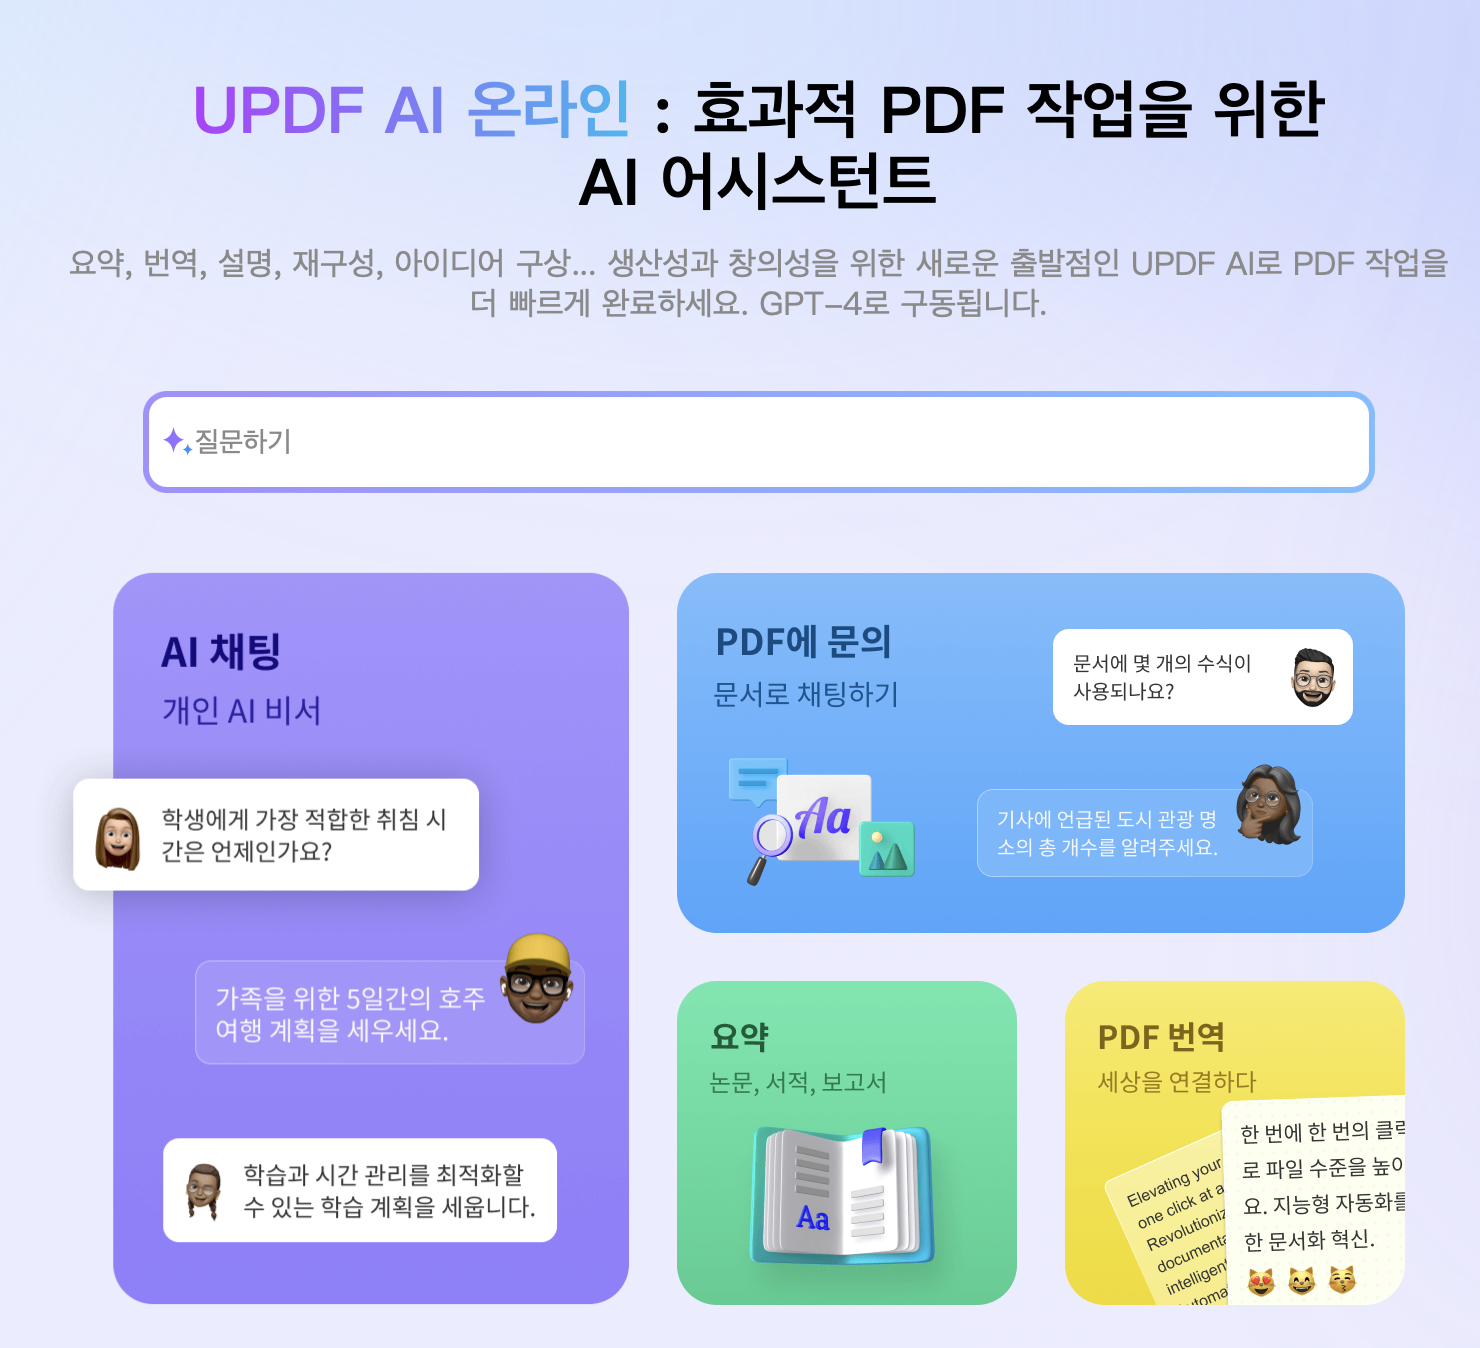 UPDF AI 온라인에서 만나니 pdf 작업이 더욱 쉽고 빨라졌네요.